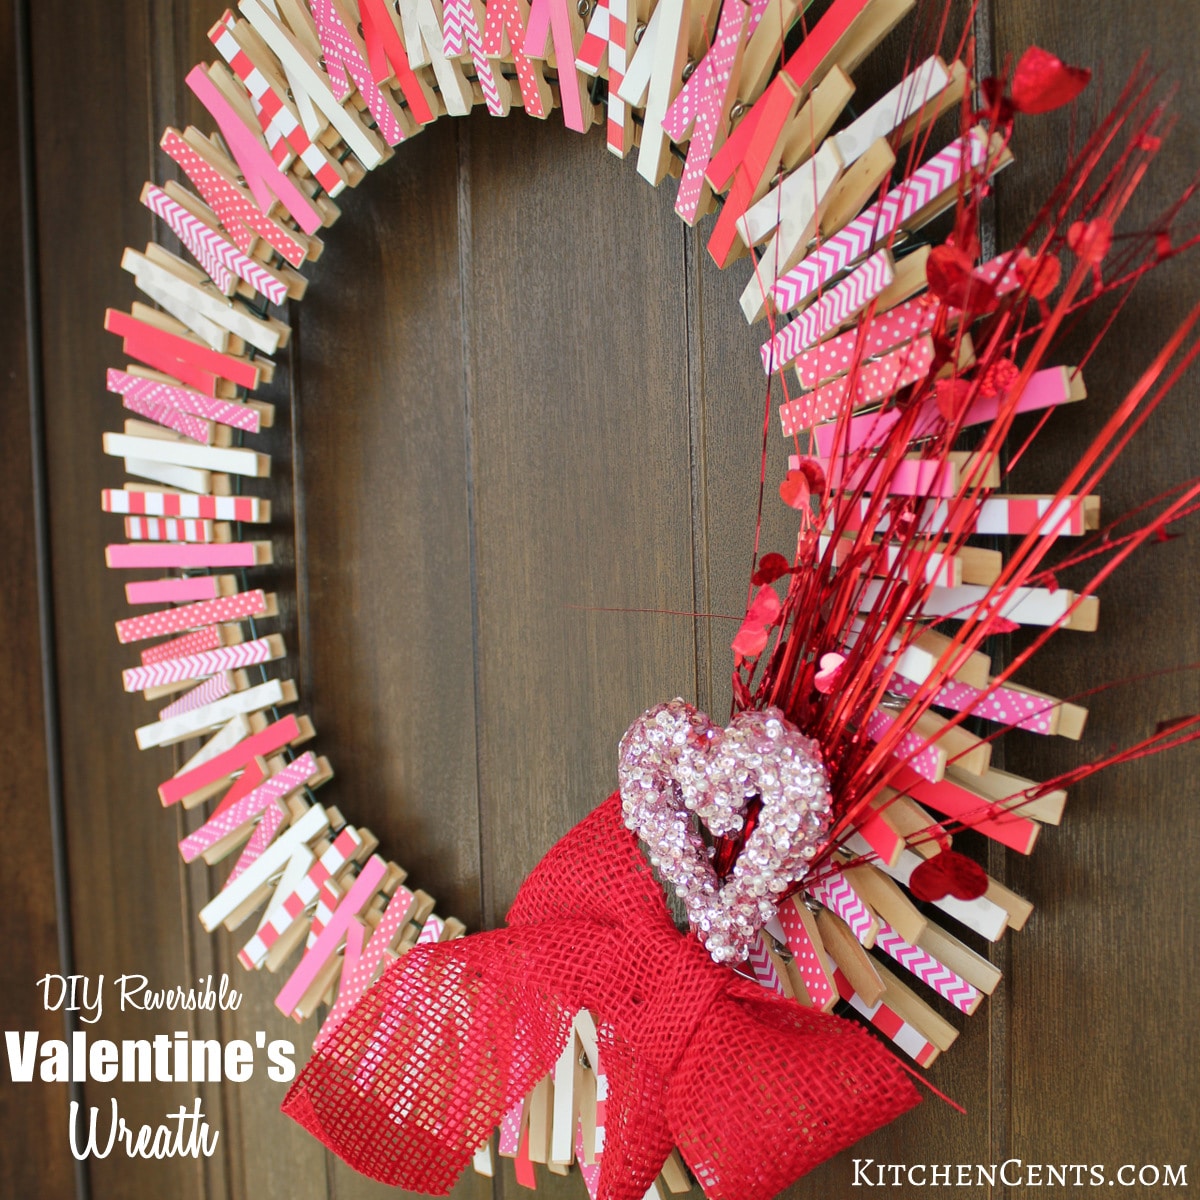 diy-reversible-valentines-wreath-kitchencents-com